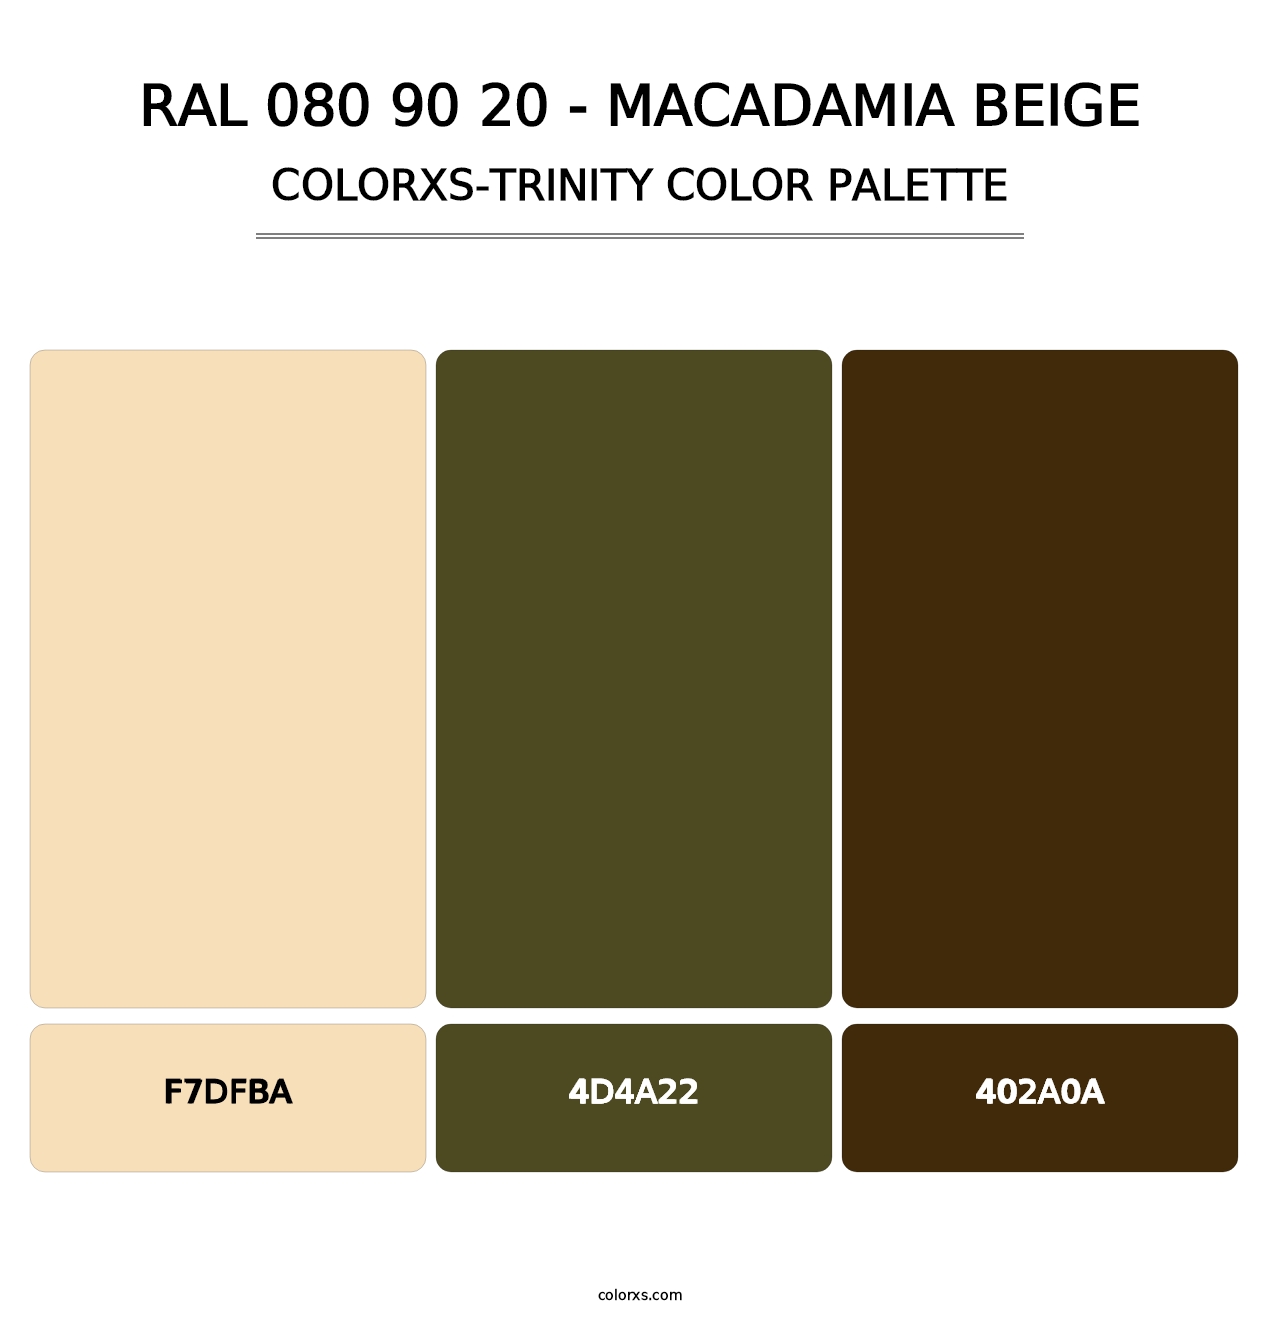 RAL 080 90 20 - Macadamia Beige - Colorxs Trinity Palette